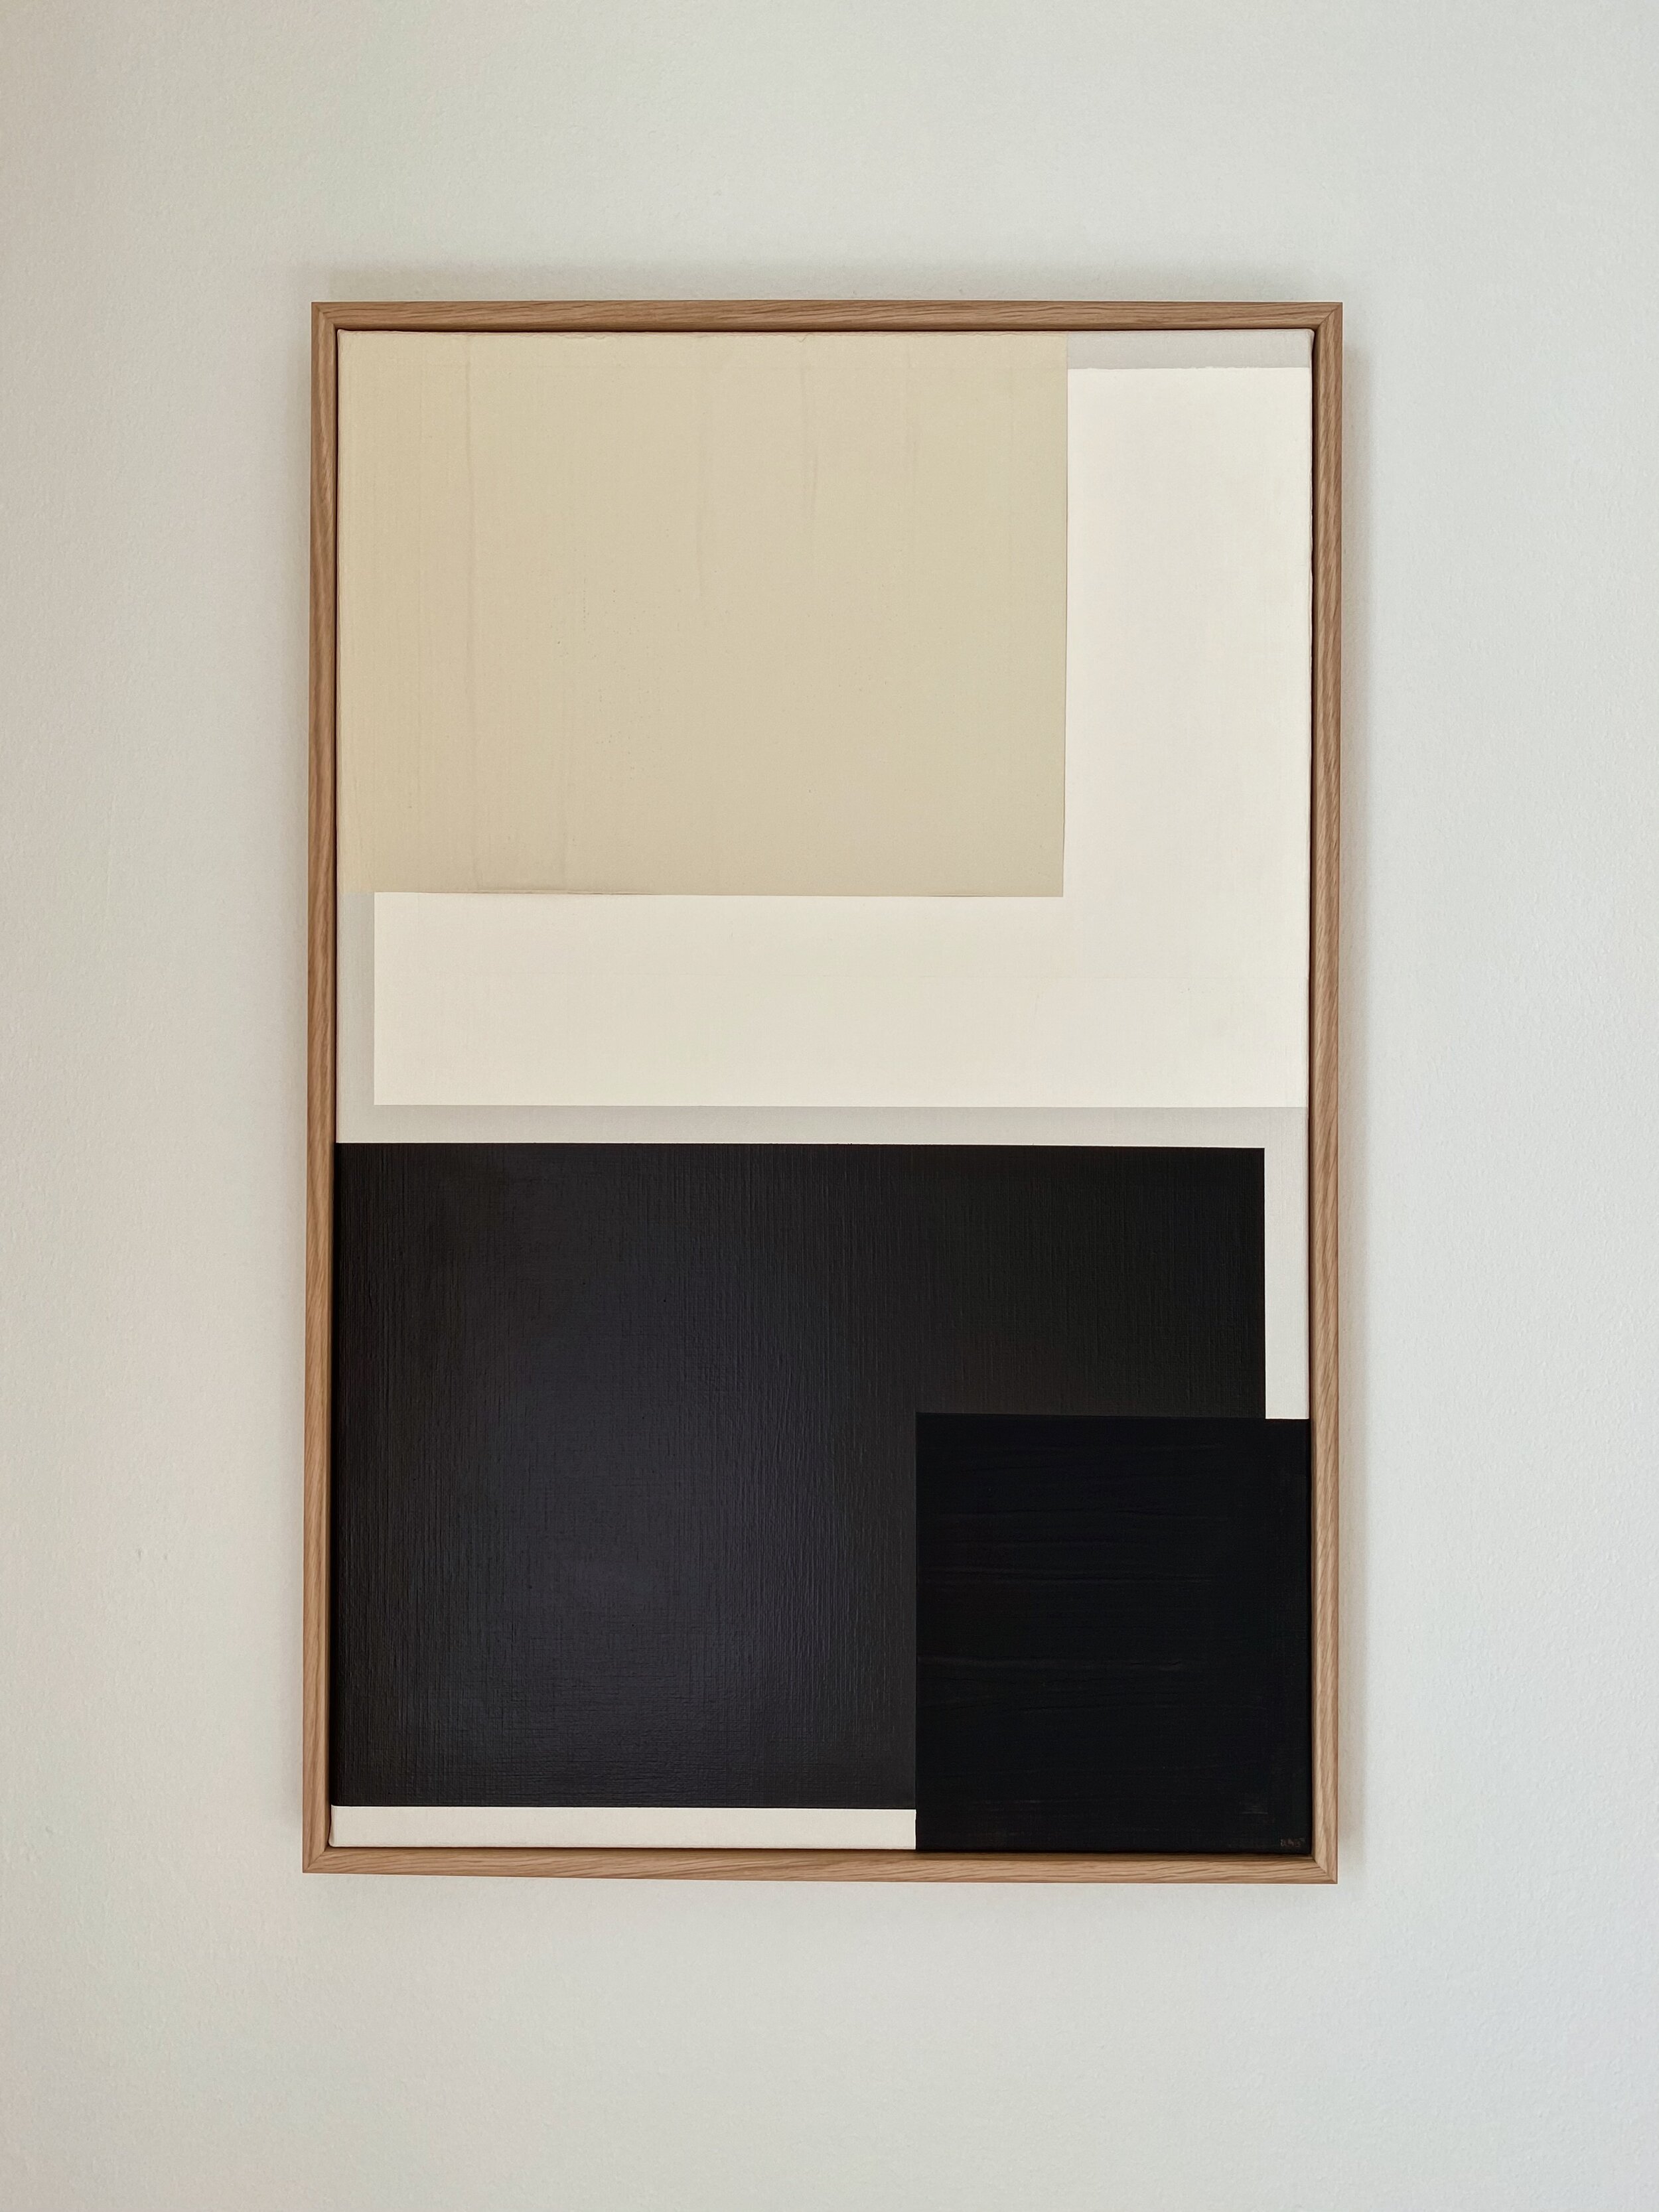 Gallery 1 — Simone Polk